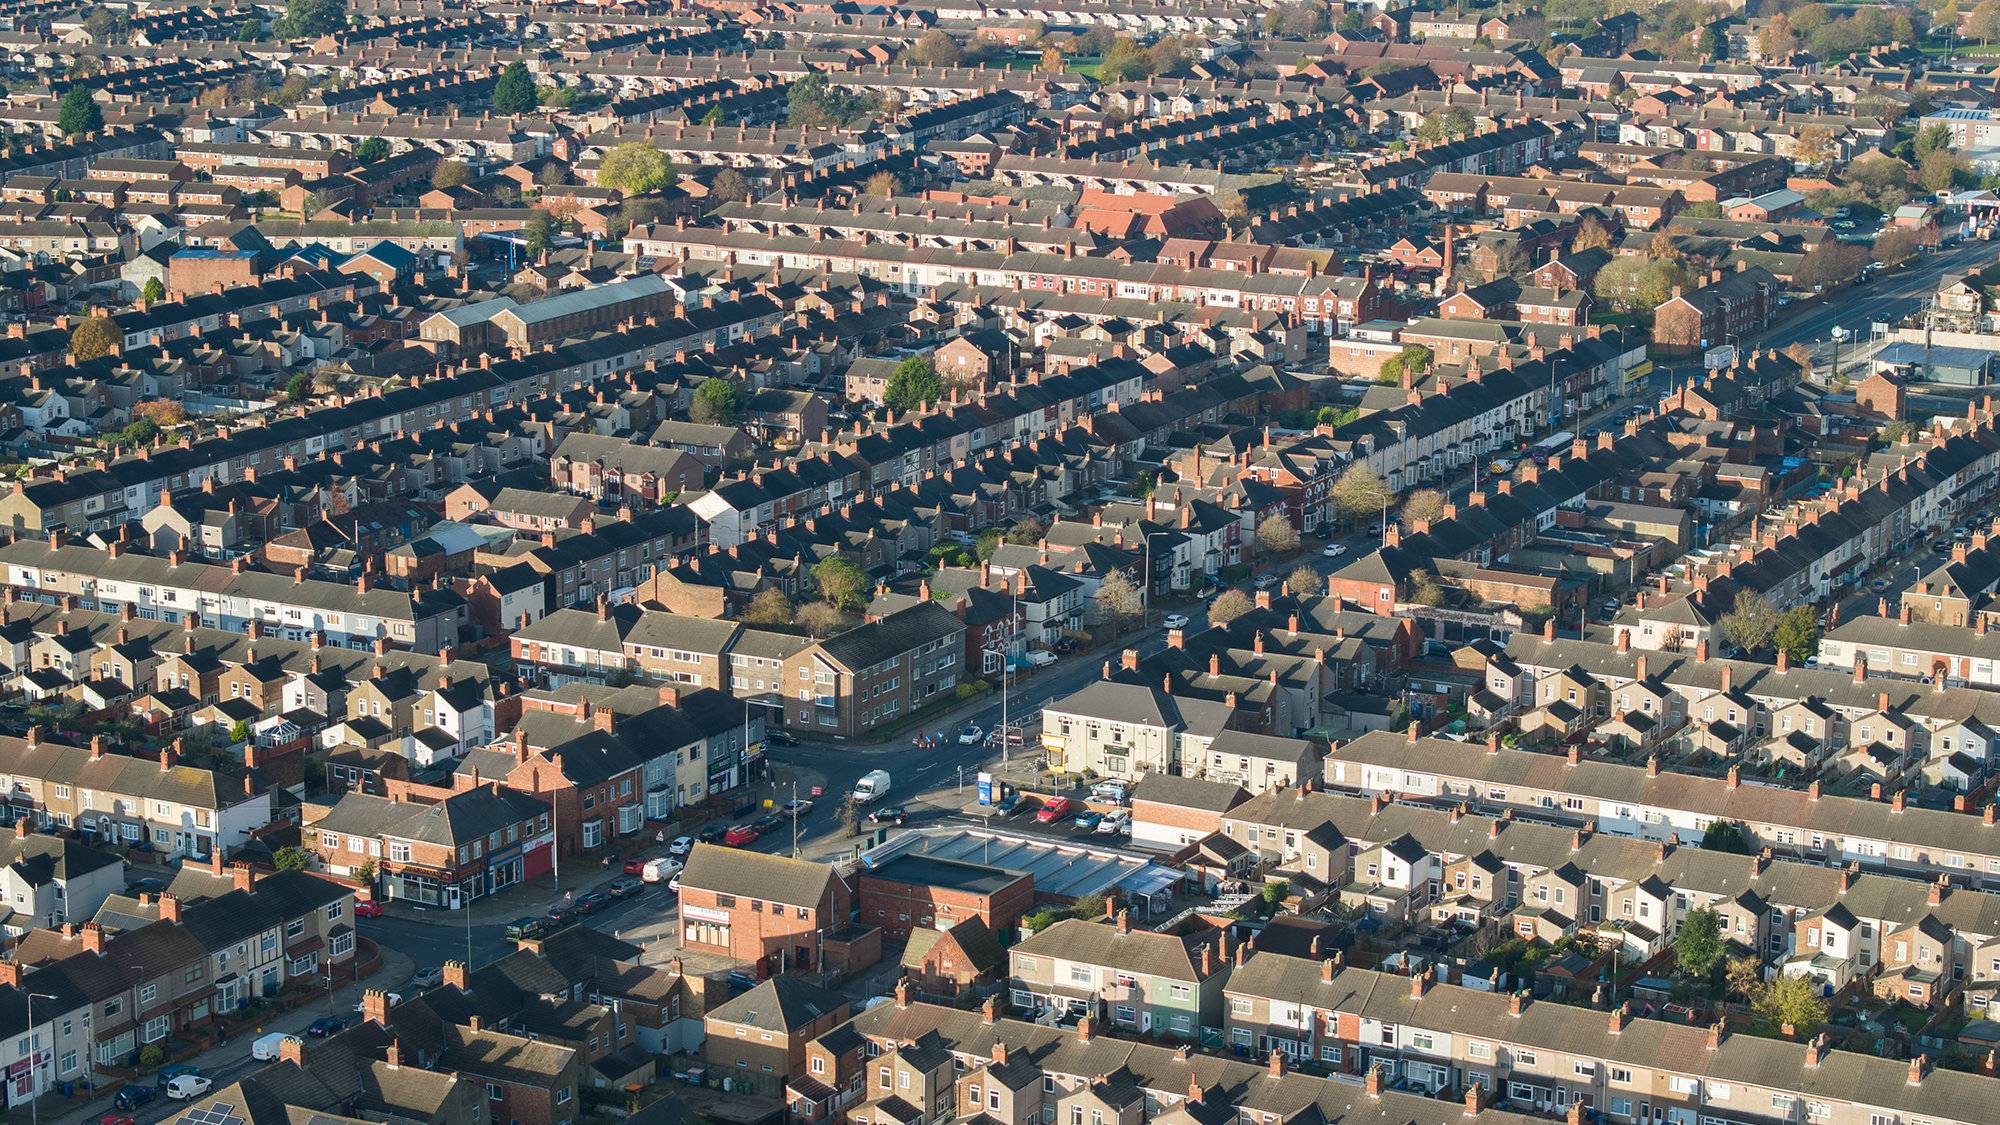 Grimsby neighbourhood with high density housing